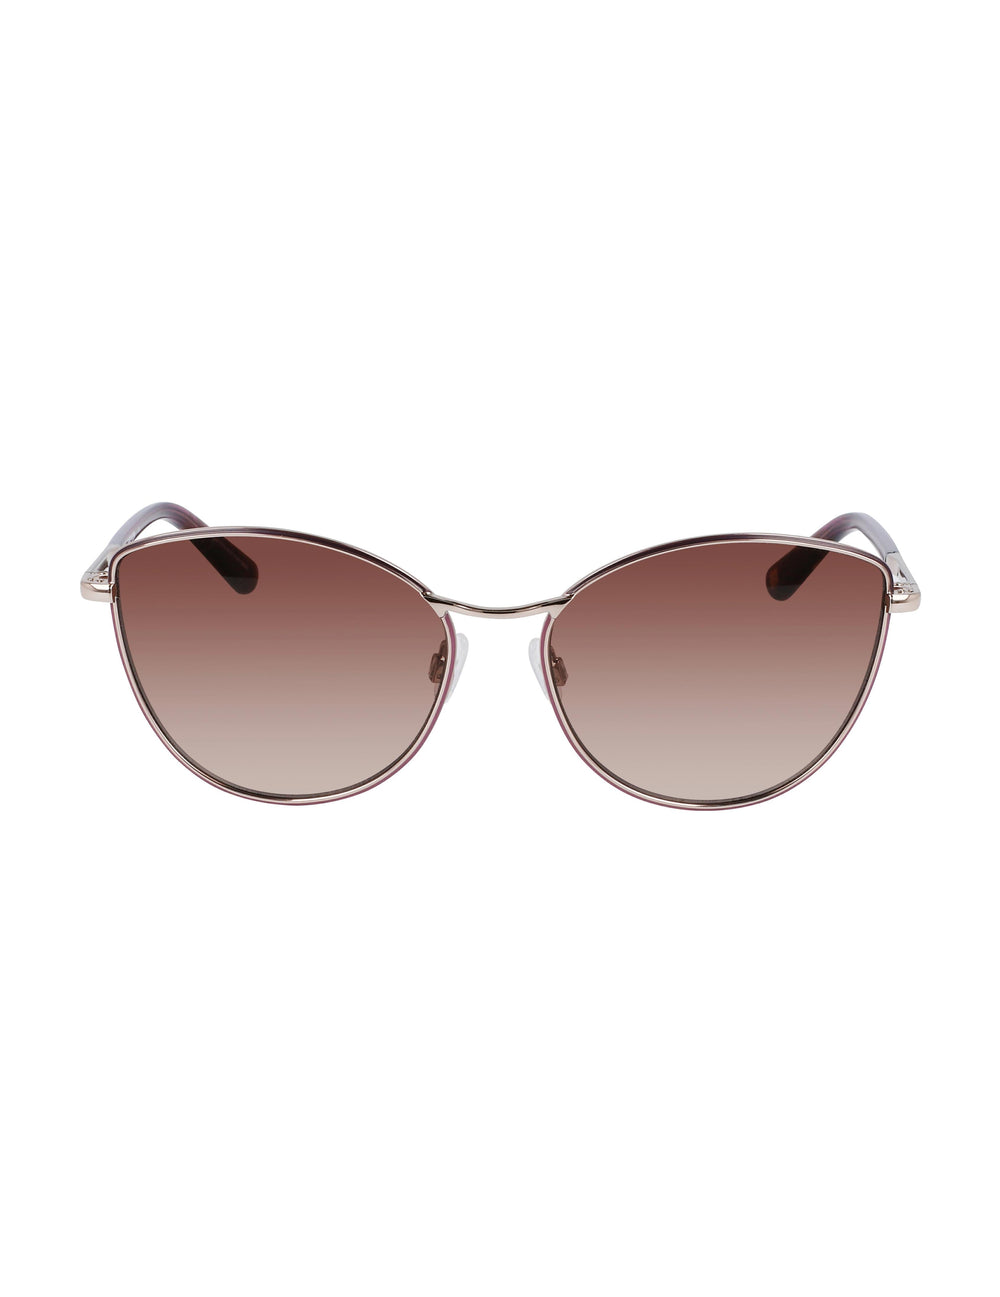 Women’s Designer Cat-Eye Sunglasses - Anne Klein